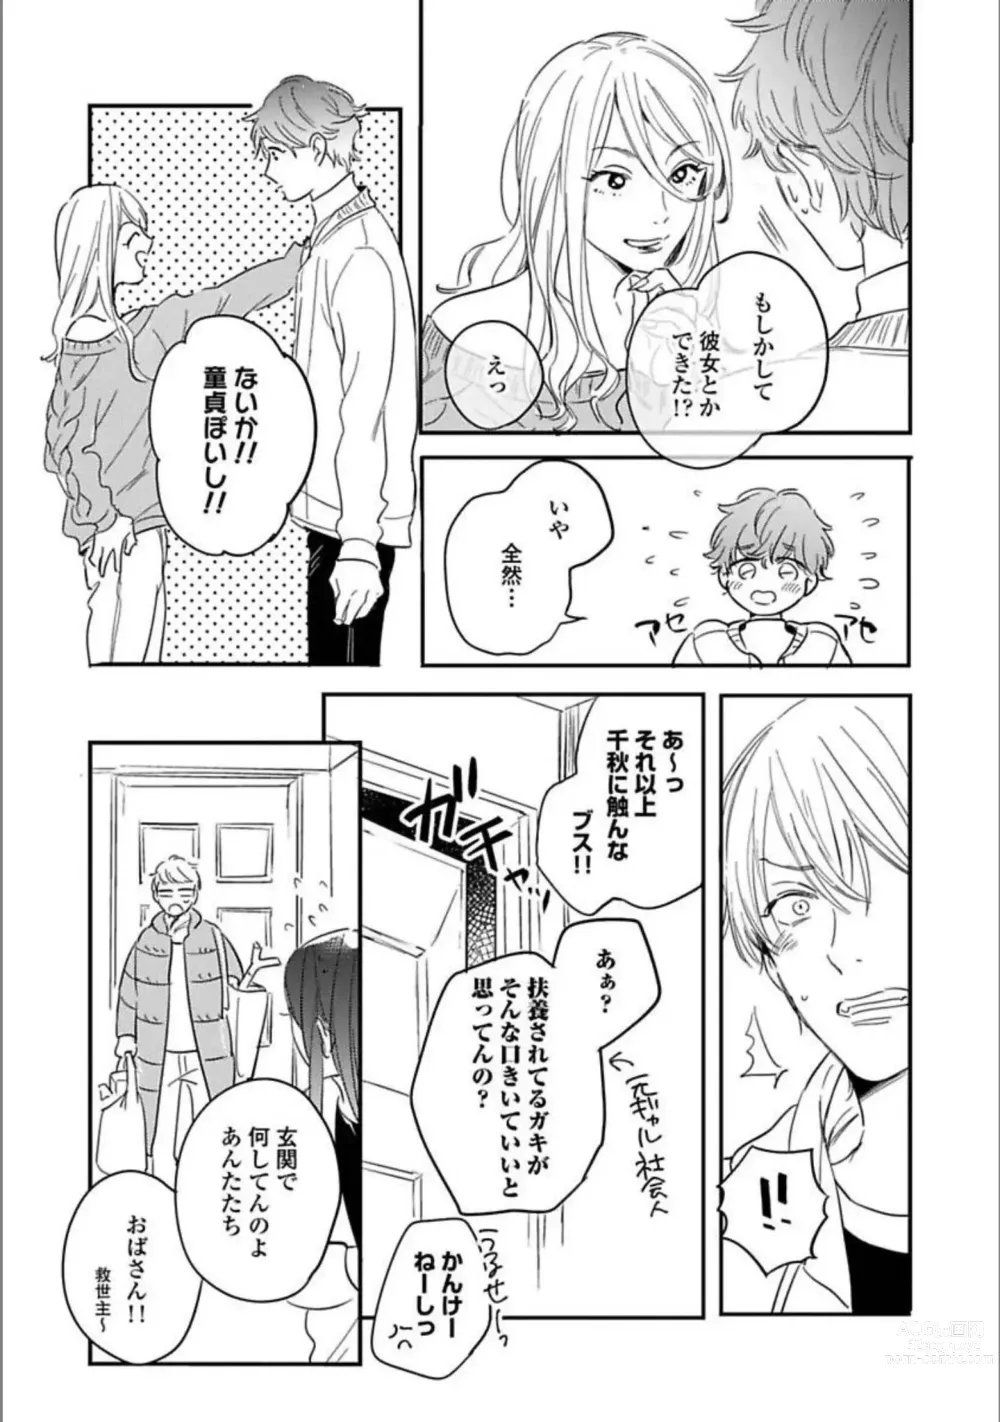 Page 22 of manga Itsuka Koi ni Naru Made Ge